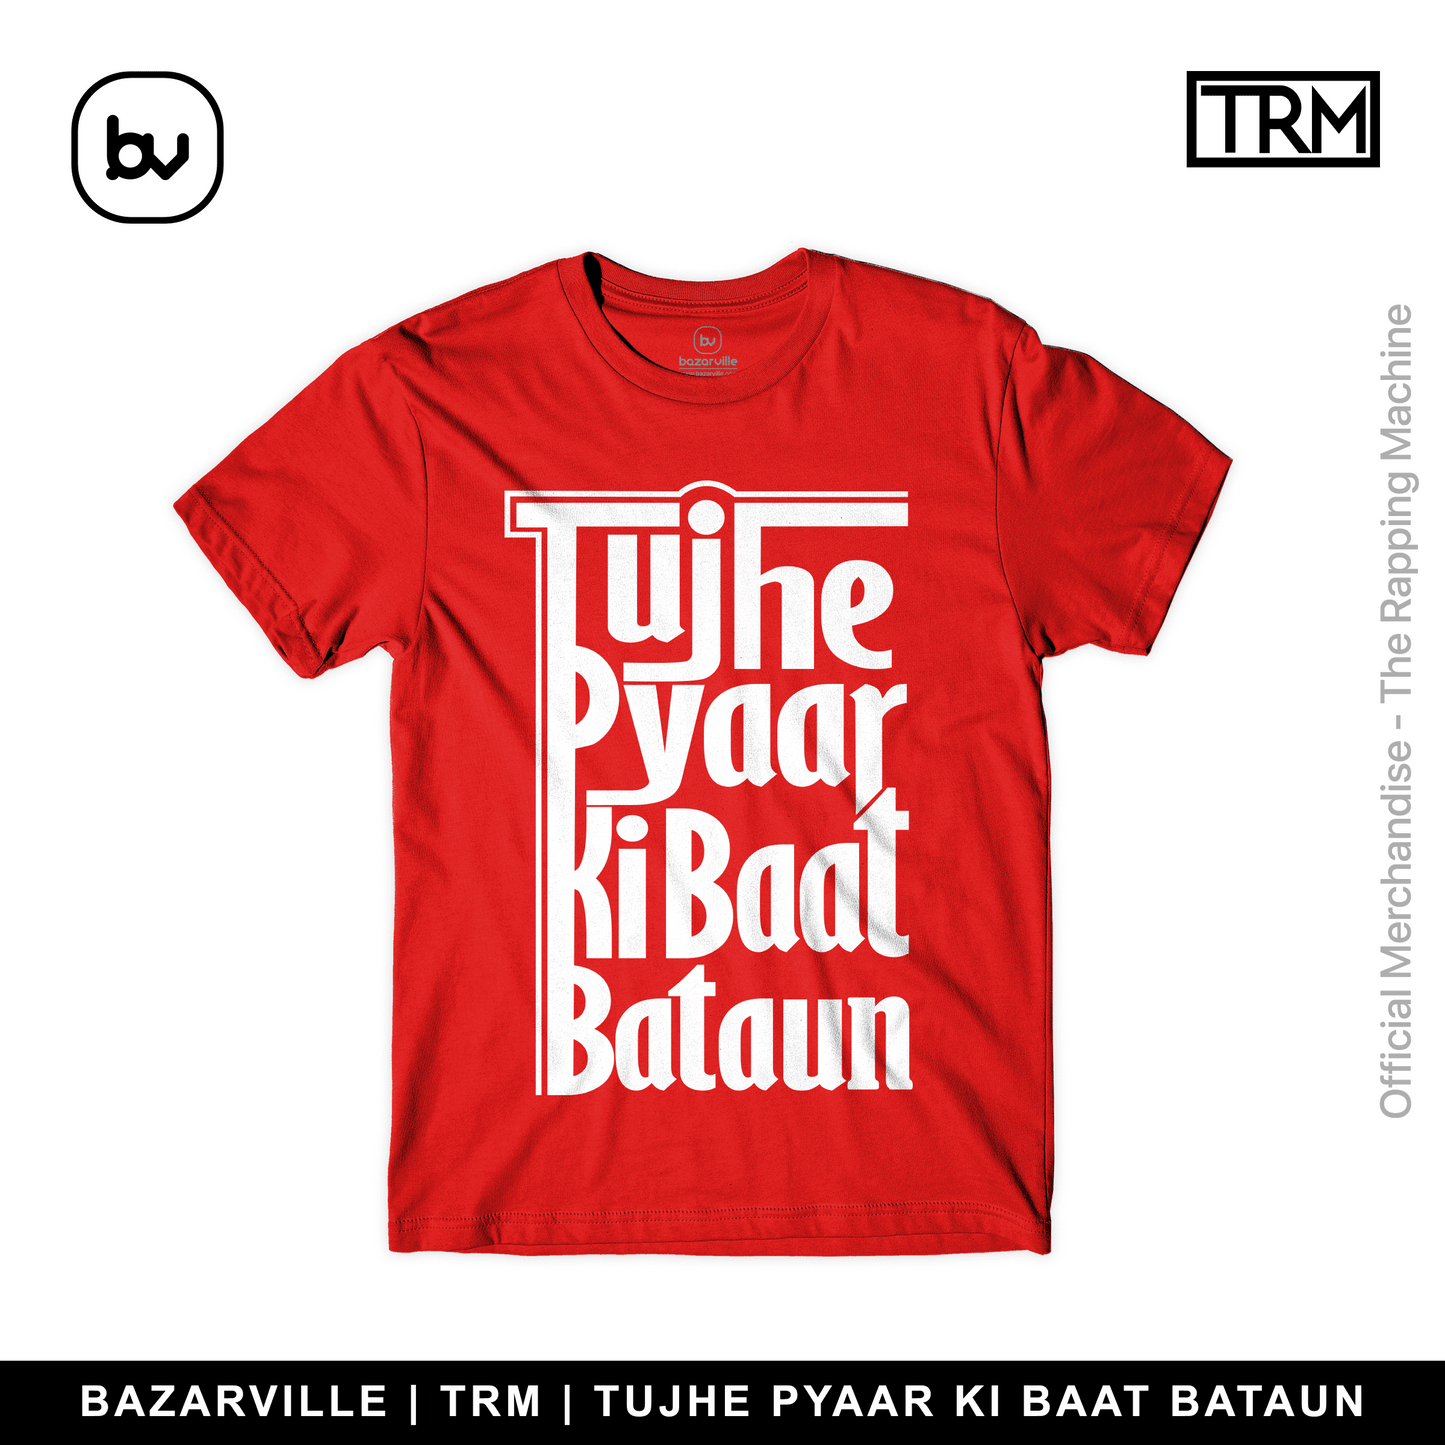 Bazarville TRM S TUJHE PYAR KI BAAT BATAU- RED(WHITE)